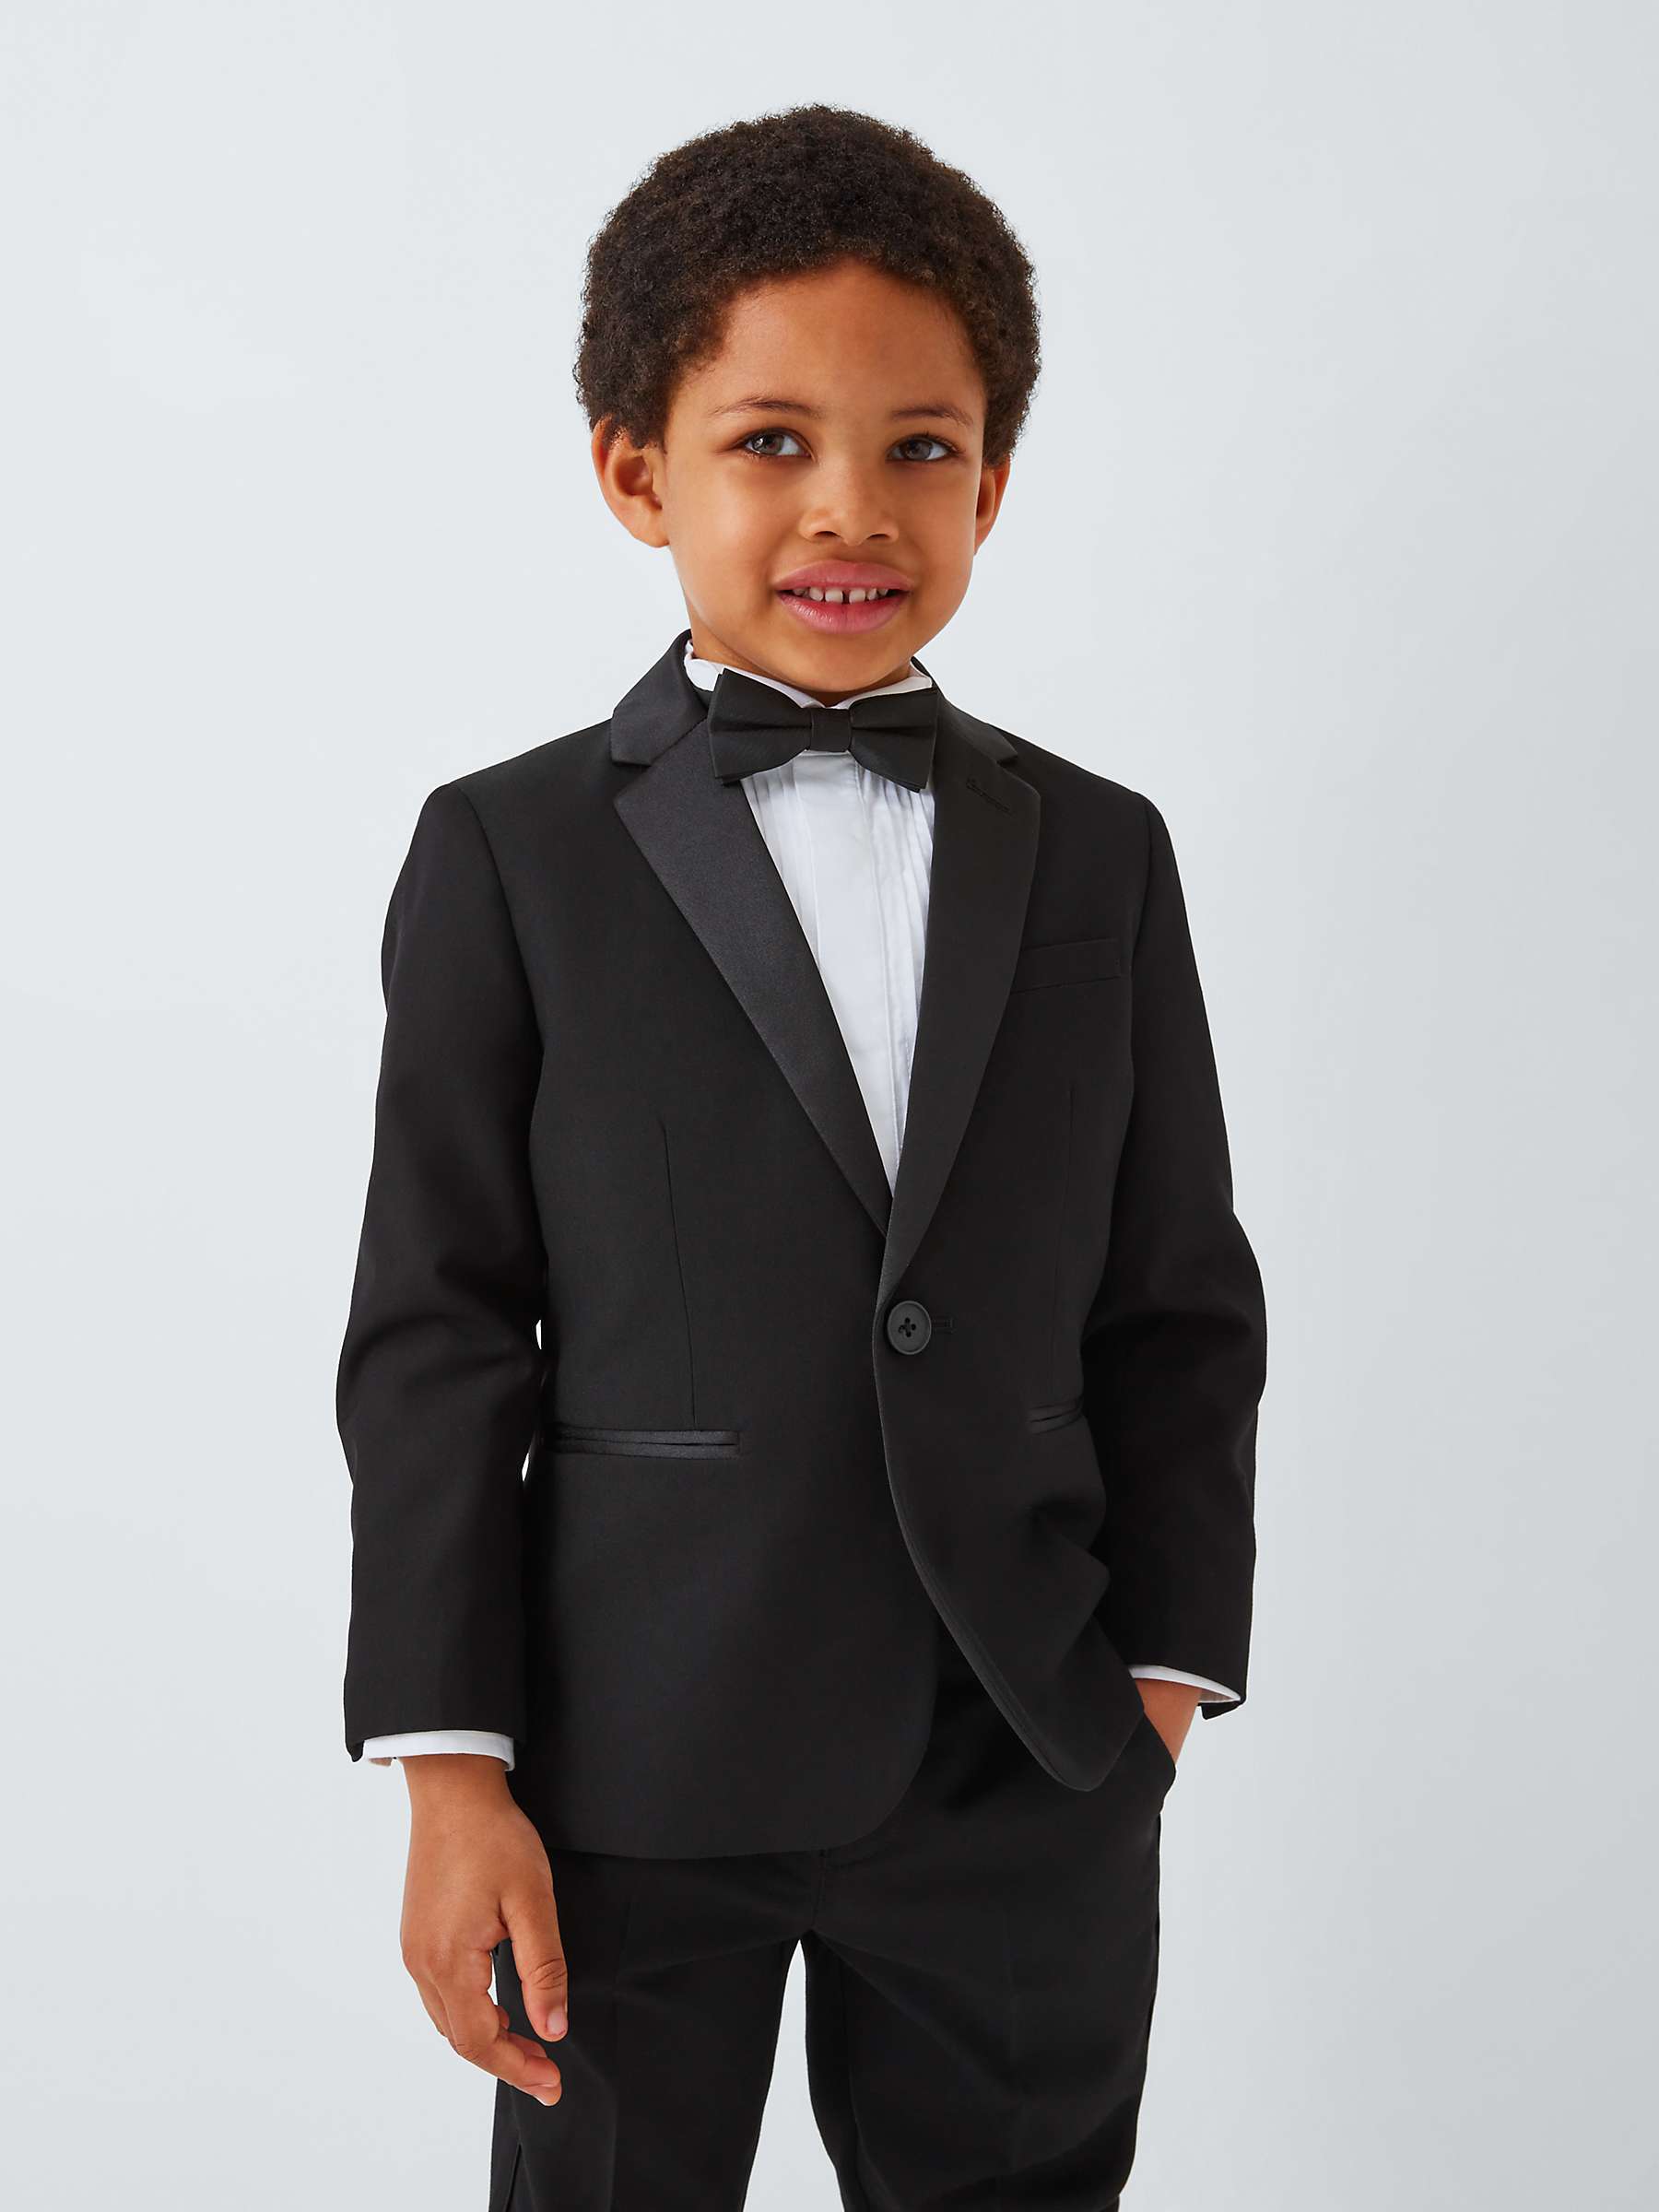 Buy John Lewis Heirloom Collection Kids' Tuxedo Suit Jacket, Black Online at johnlewis.com